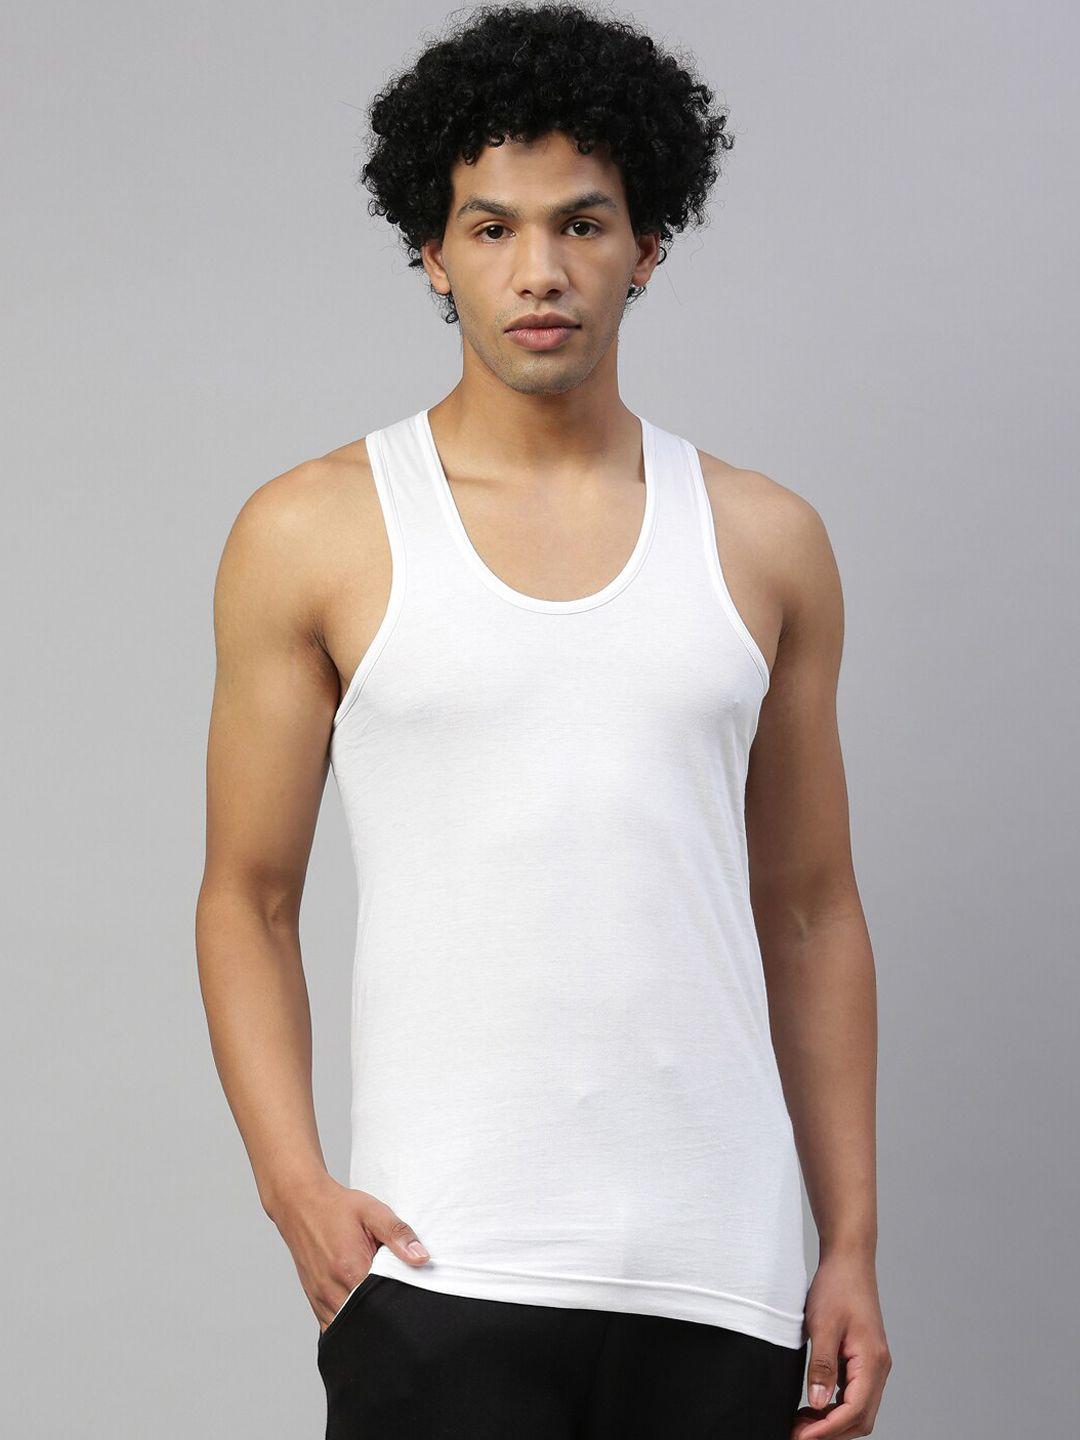 dixcy scott maximus men white pure cotton innerwear vests